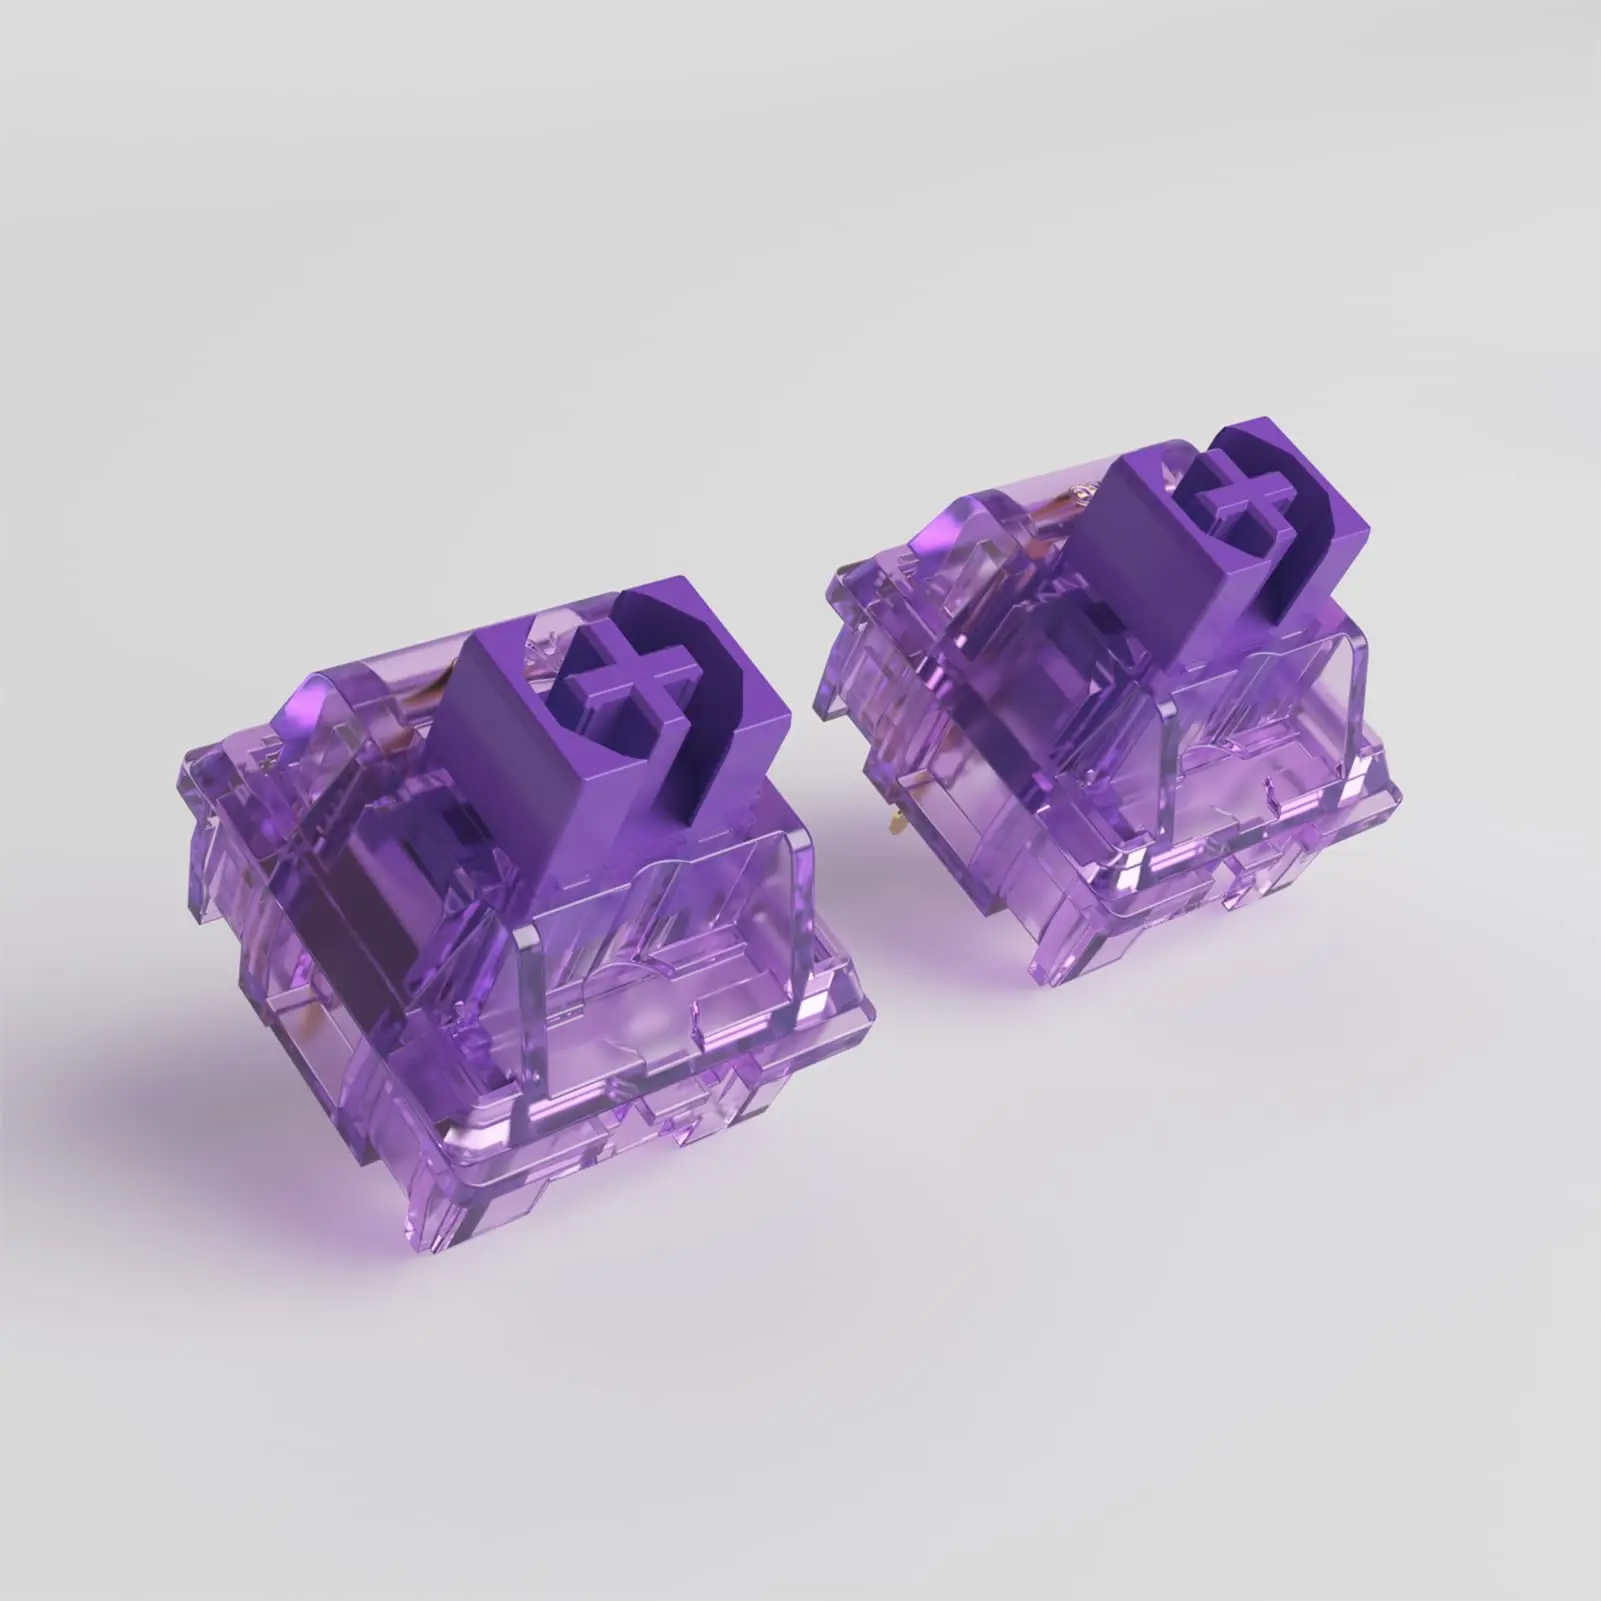 Cs jelly. Akko Jelly Purple. Переключатели Akko Custom Switch. Свитчи/Switch Akko CS Jelly Purple. Akko 3098b Jelly Purple.